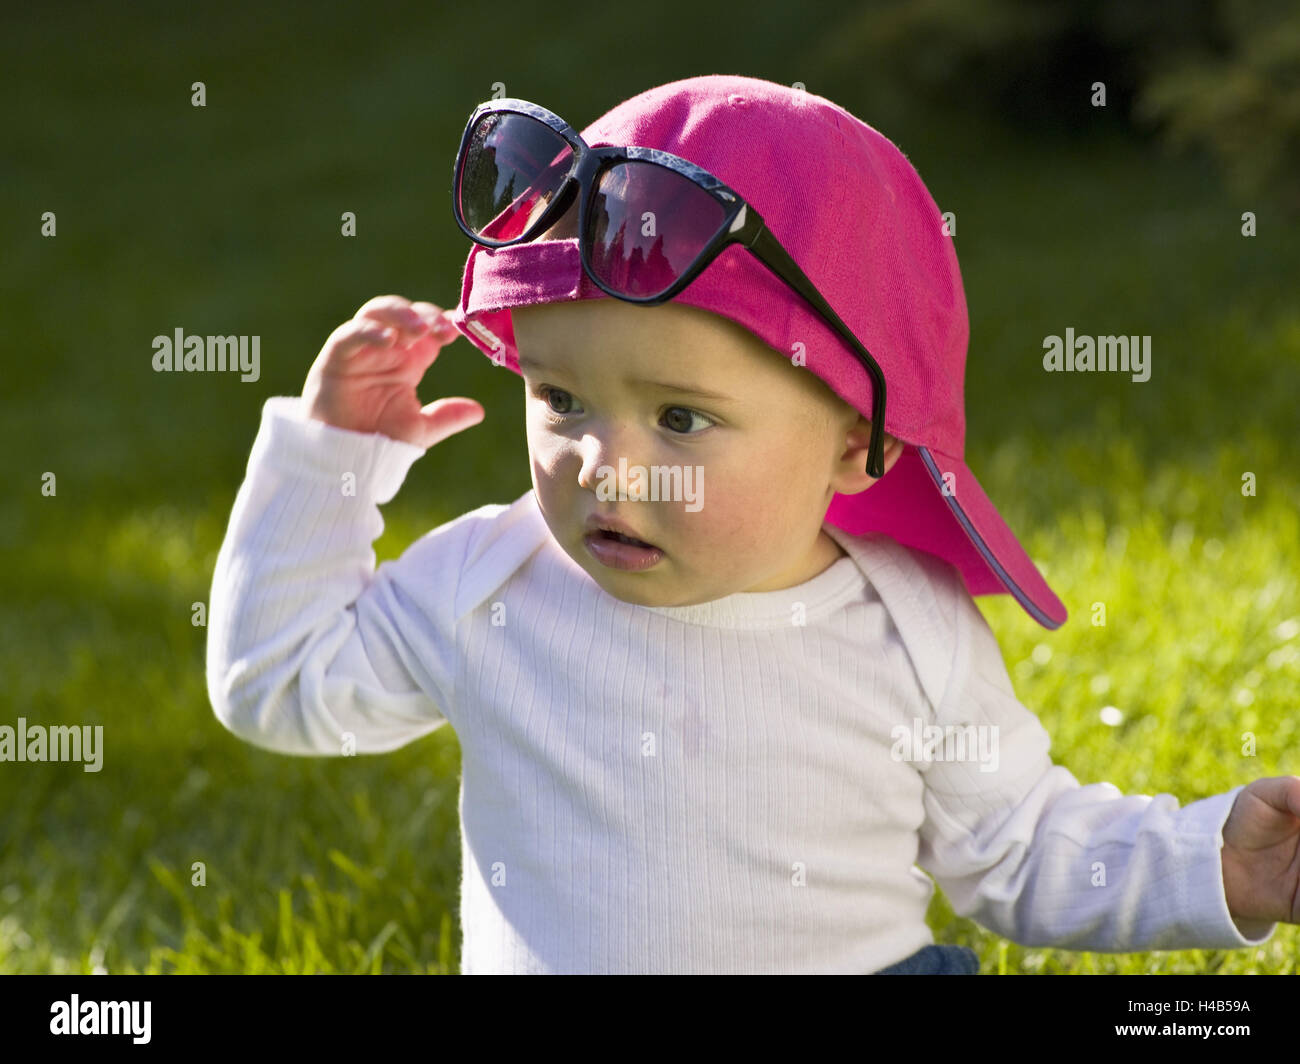 Garden, baby, cap, sunglasses, play, meadow, sit, summer, Stock Photo